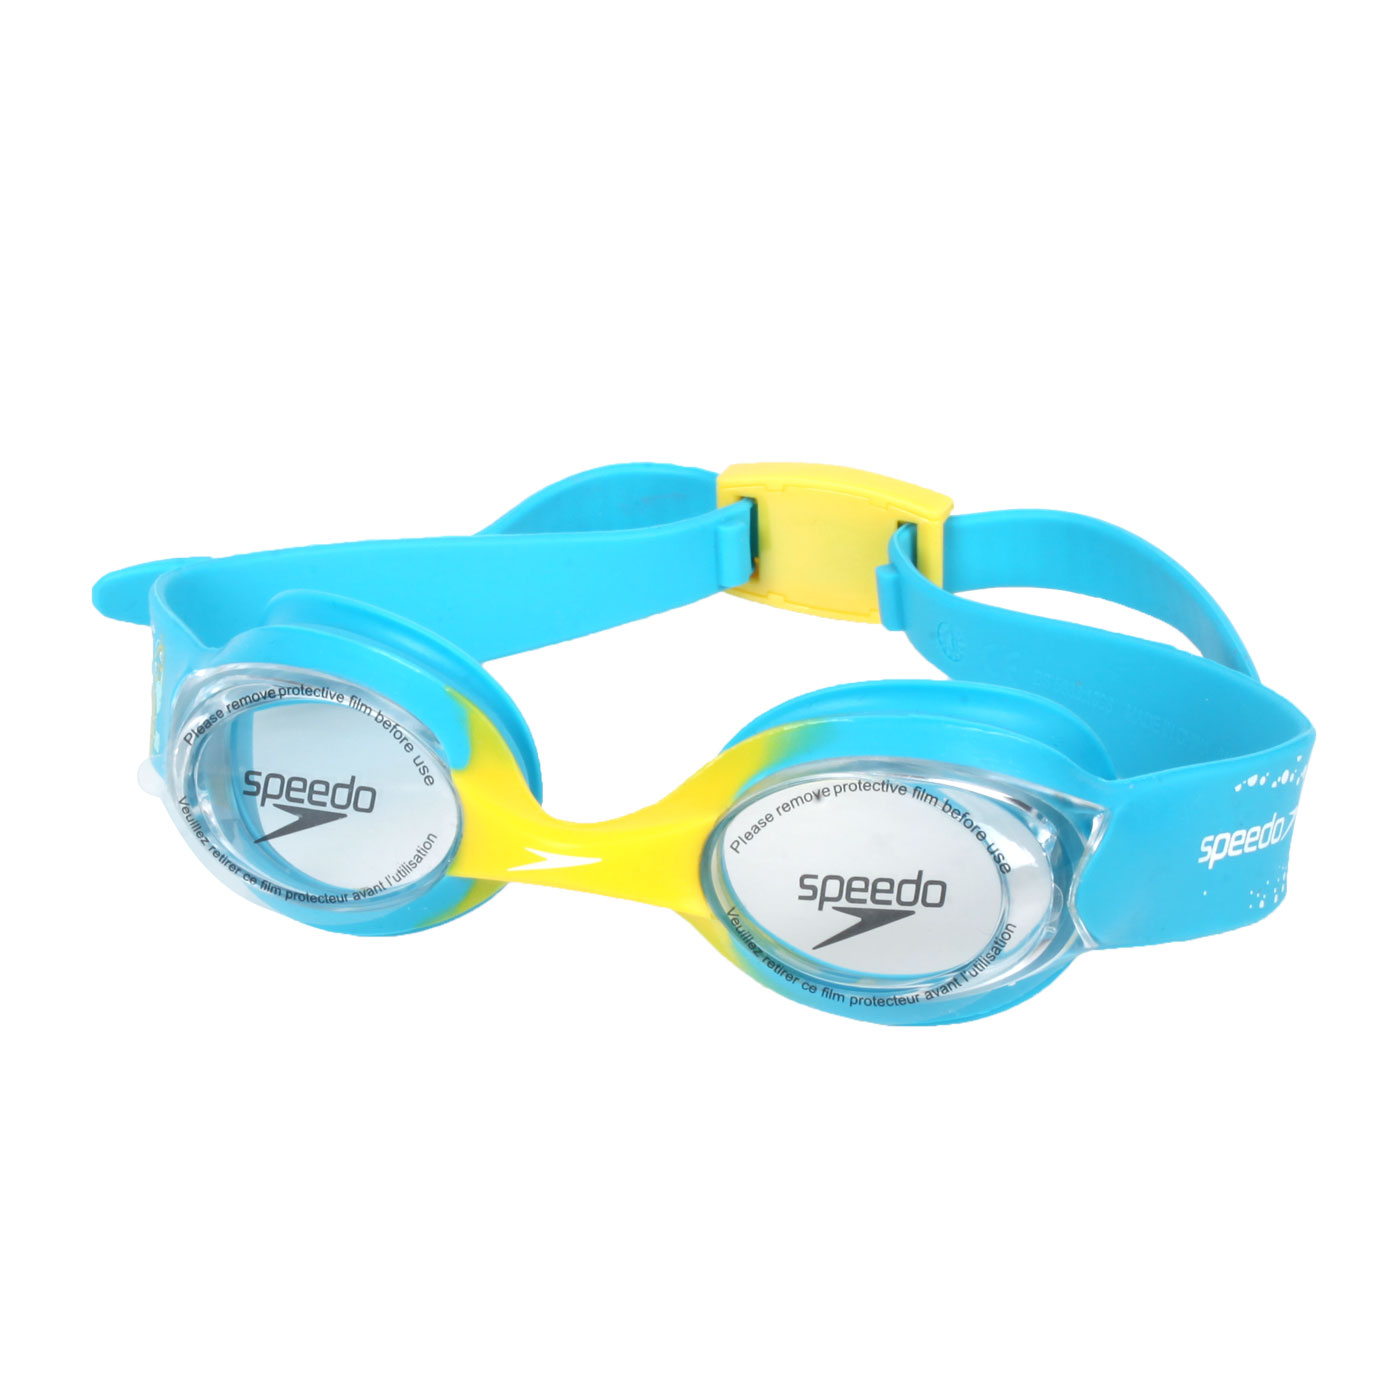 SPEEDO 幼童運動泳鏡 Illusion SD812115D664 - 水藍黃